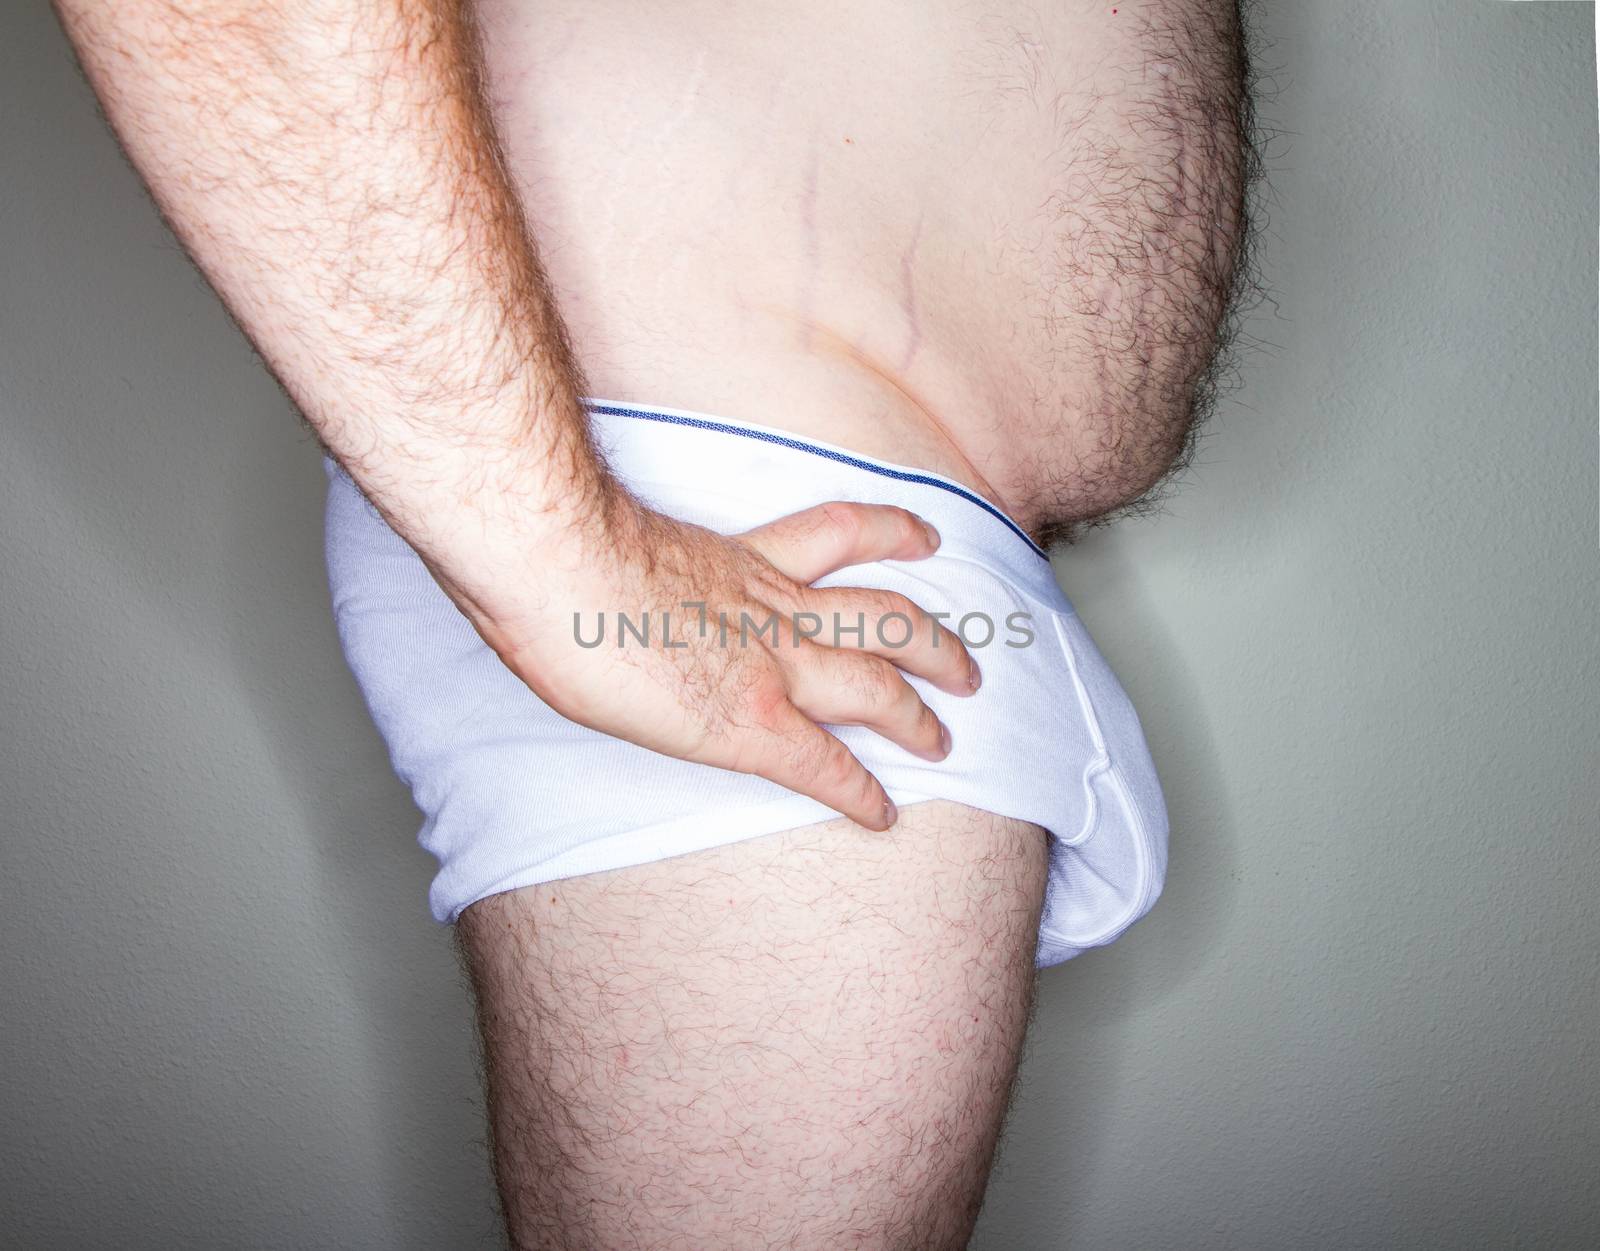 Bulge in his underwear